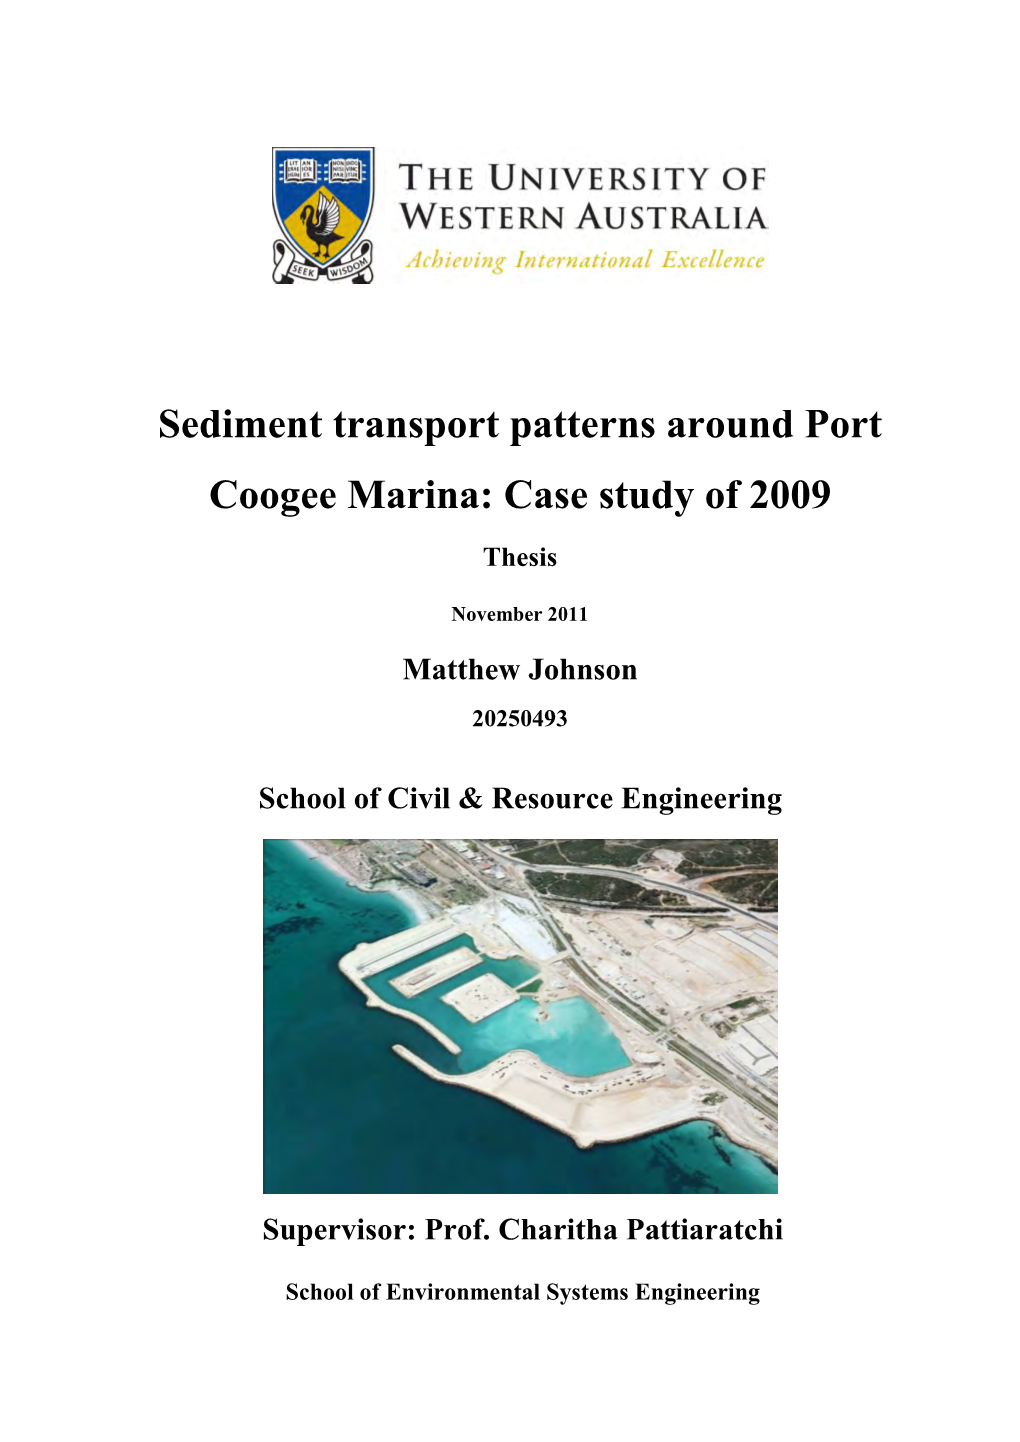 Sediment Transport Patterns Around Port Coogee Marina: Case Study of 2009